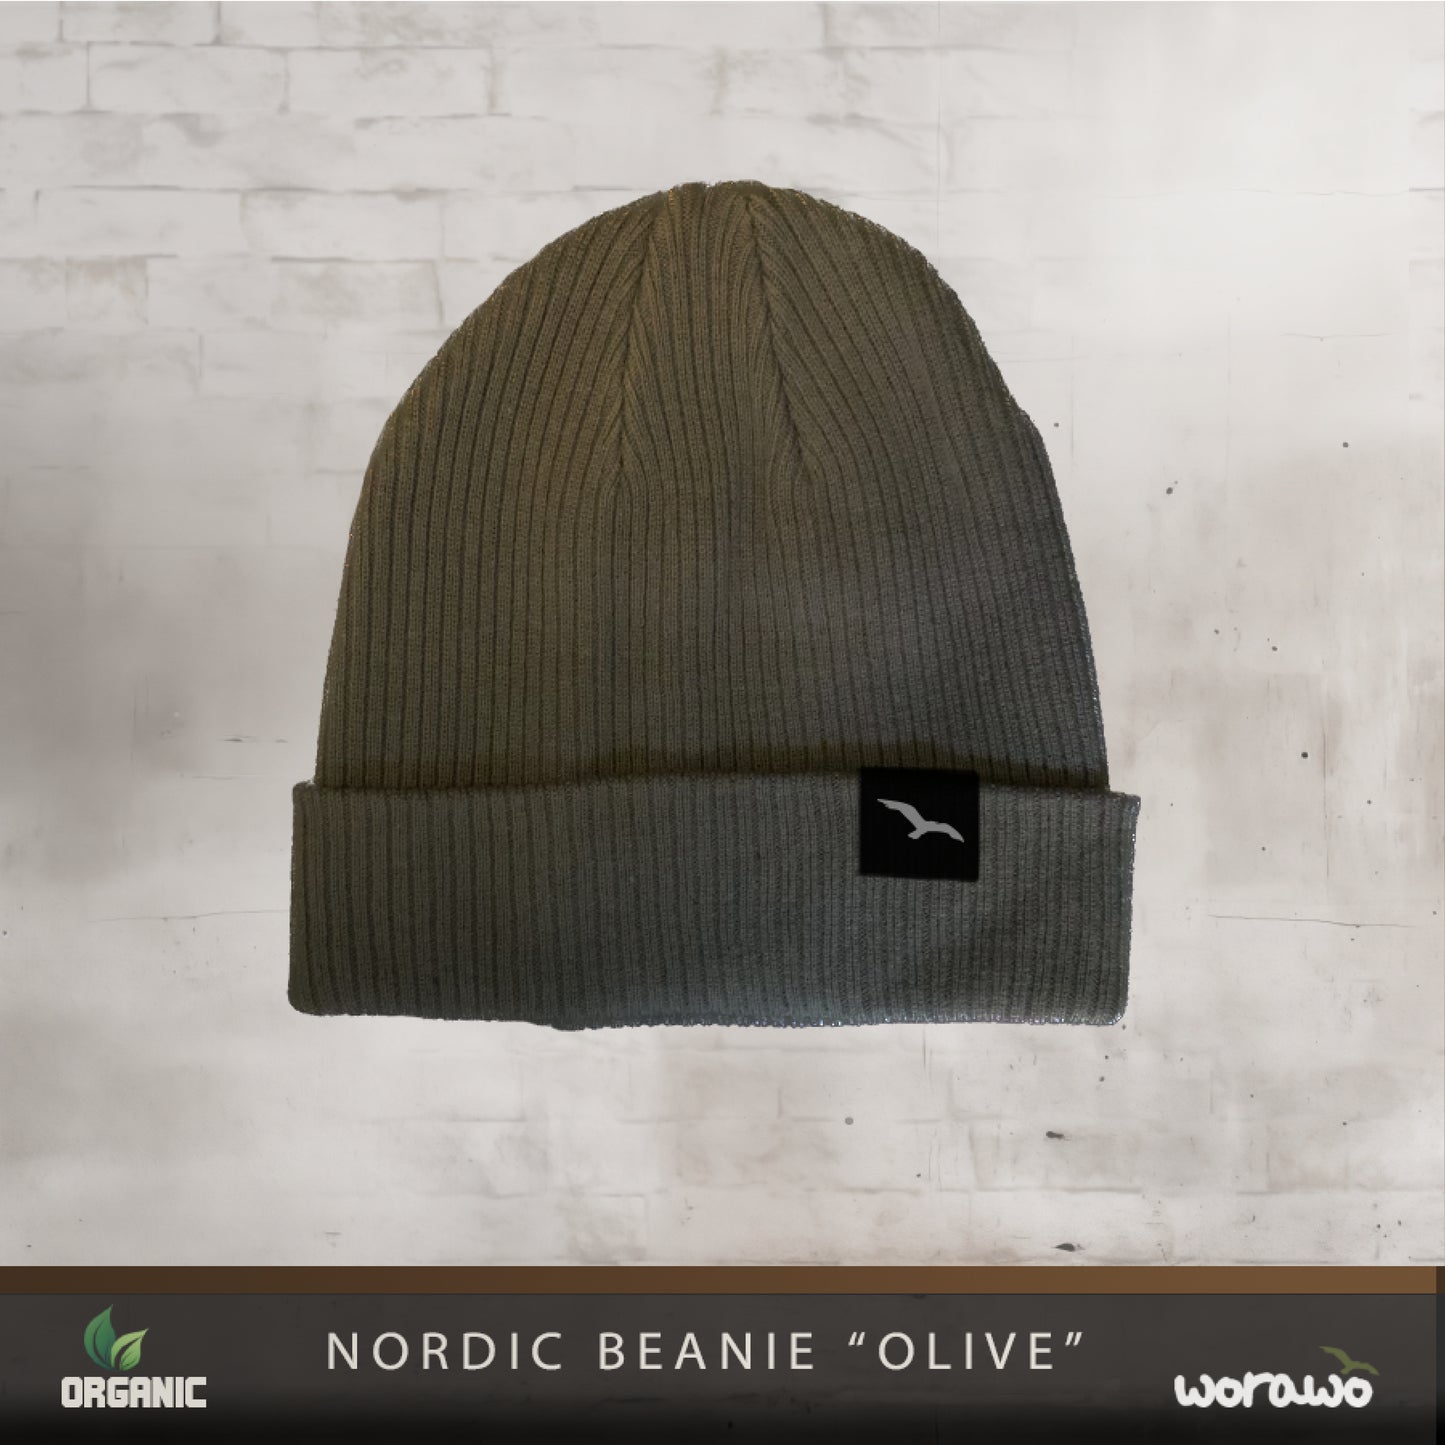 Nordic Beanie "olive"